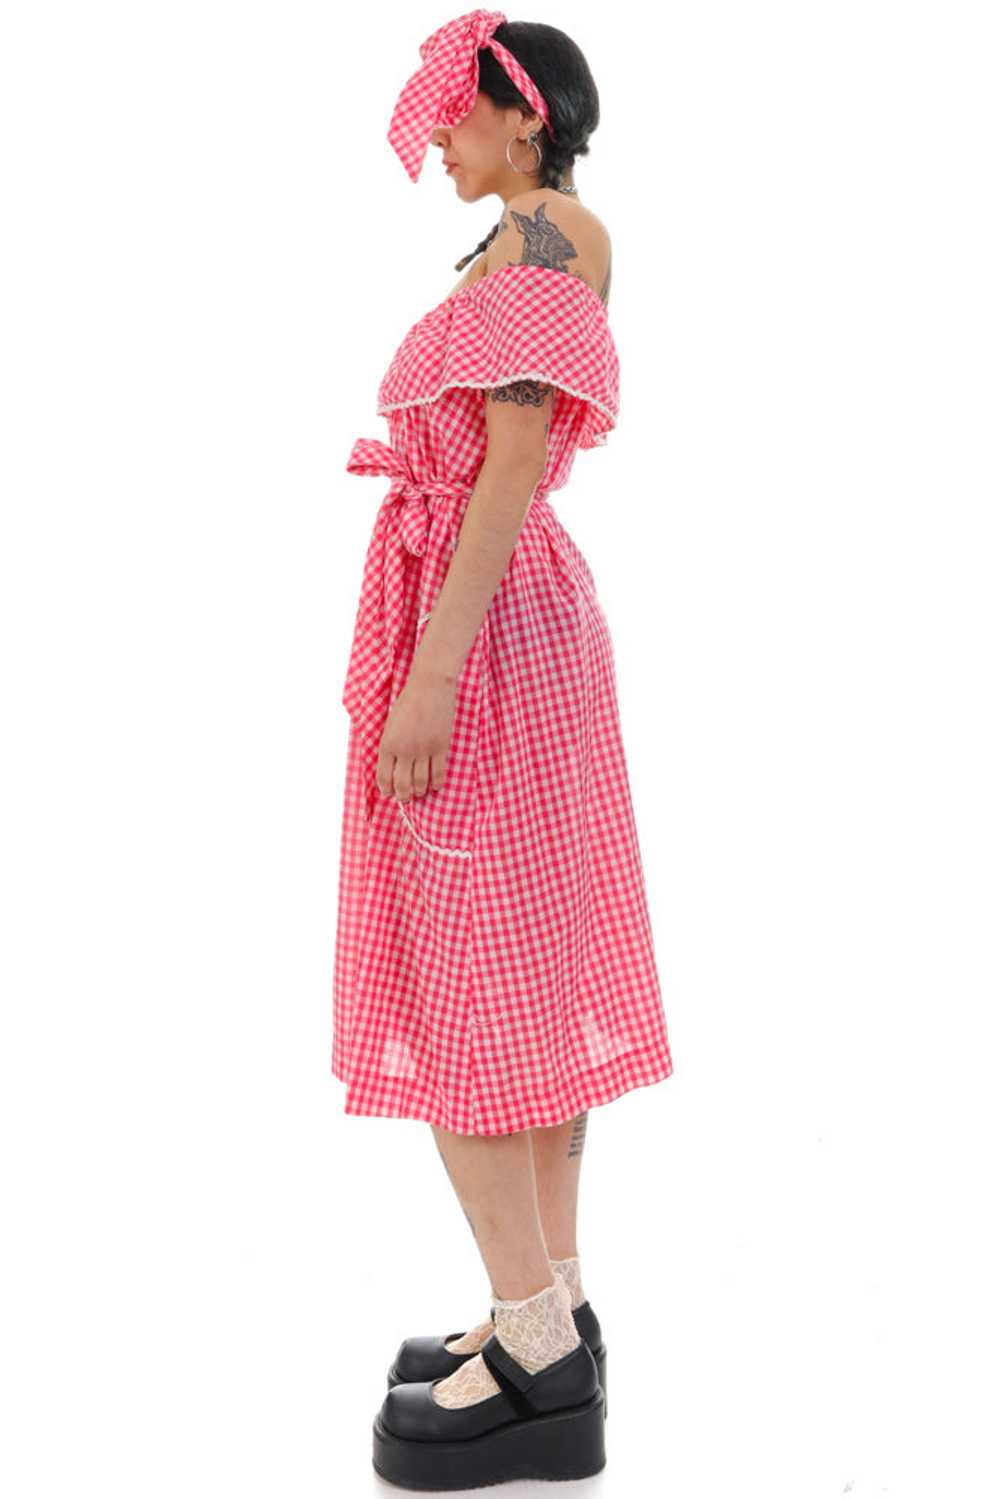 Vintage 70's Pretty In Pink Gingham Dress - OSFM - image 4